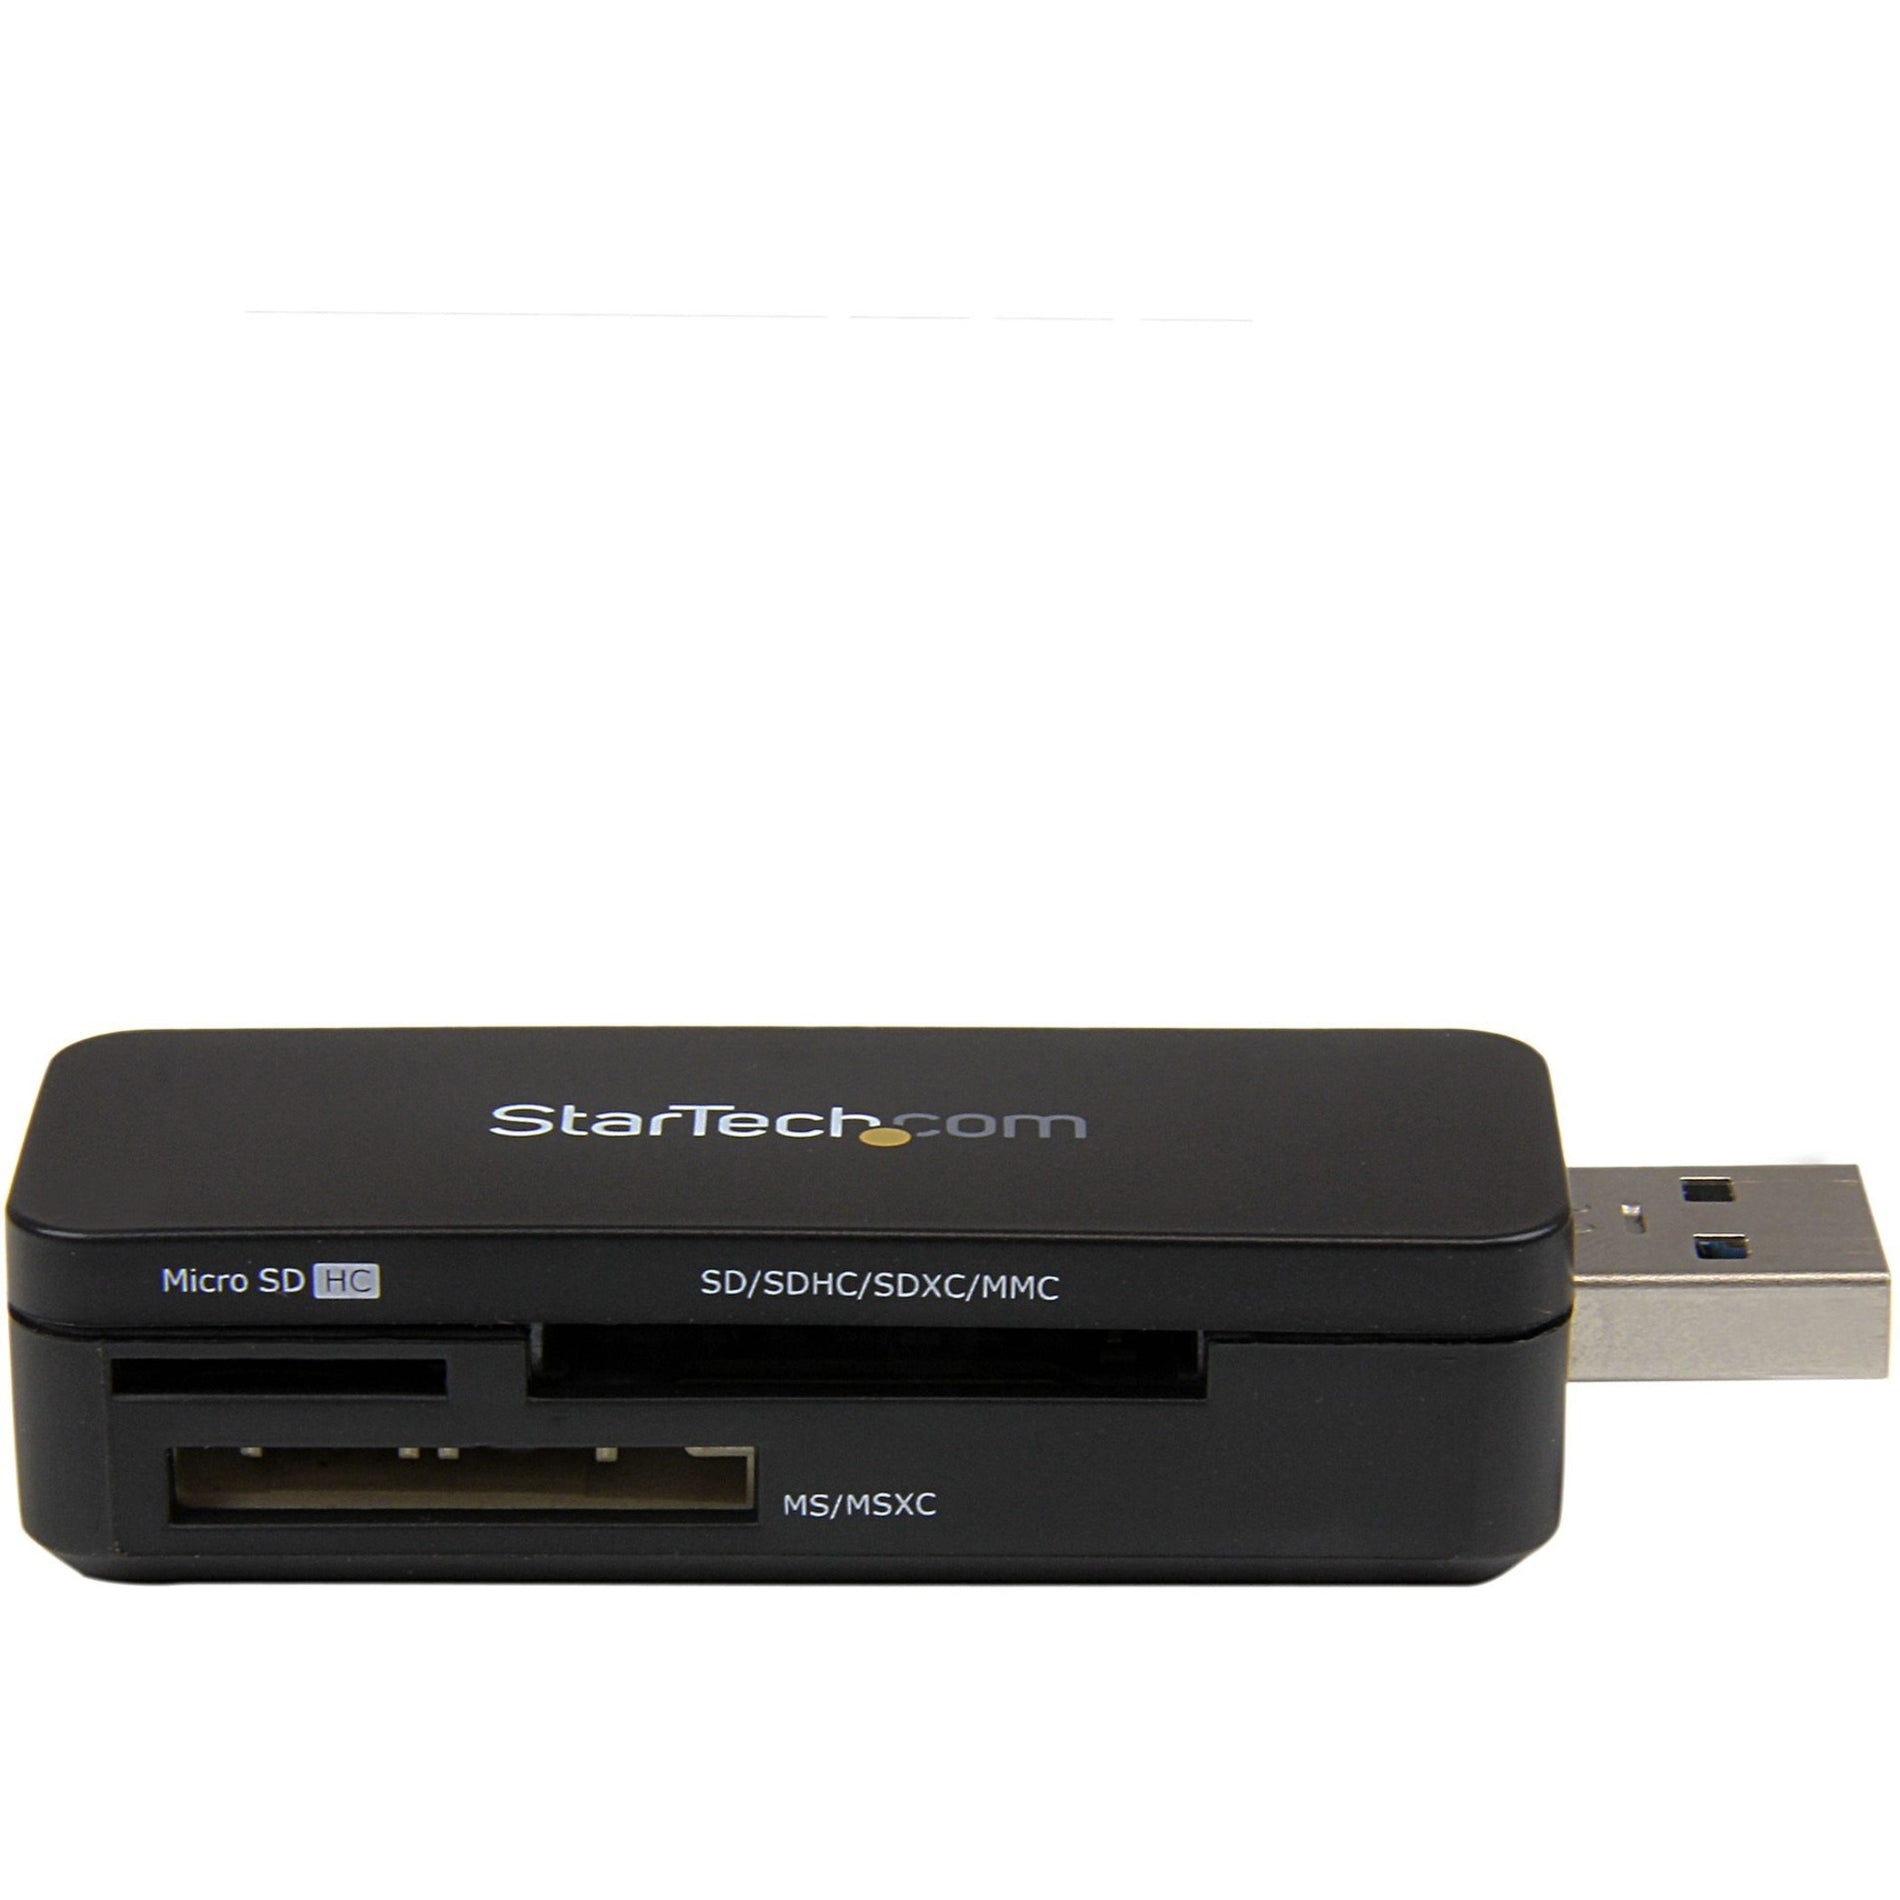 StarTech.com FCREADMICRO3 USB 3.0 External Flash Multi Media Memory Card Reader - SDHC MicroSD, High-Speed Data Transfer and Easy File Management